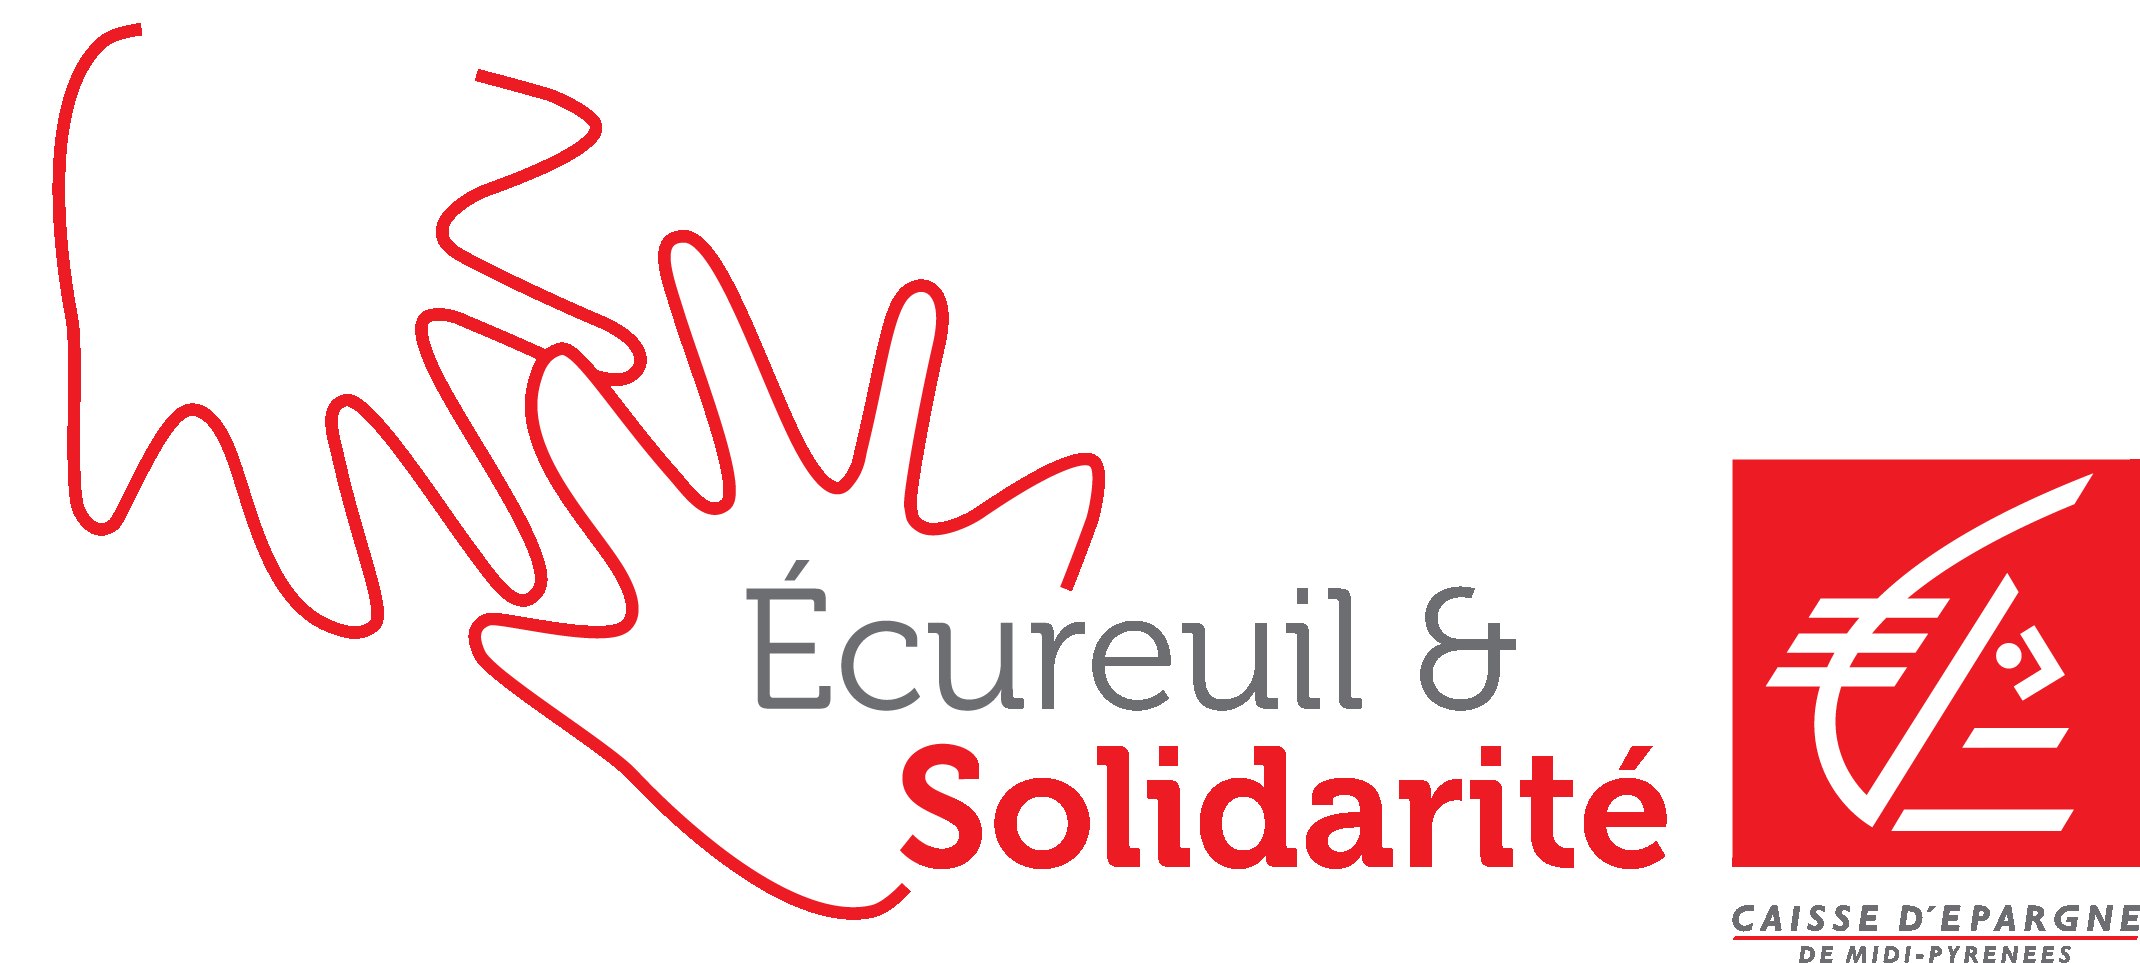 Ecureuil et Solidarite